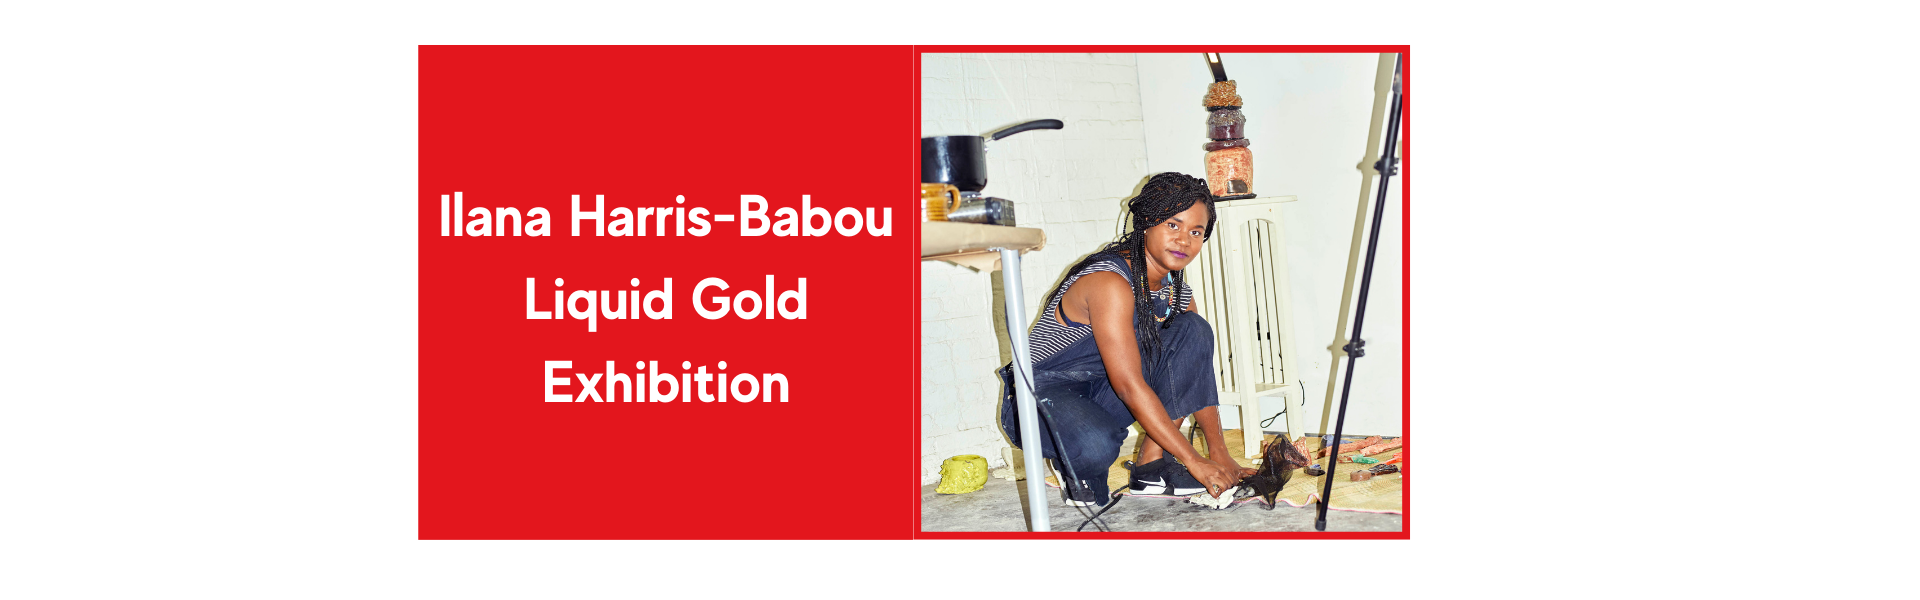 Ilana-Harris-Babou-Liquid-Gold-Exhibition.png